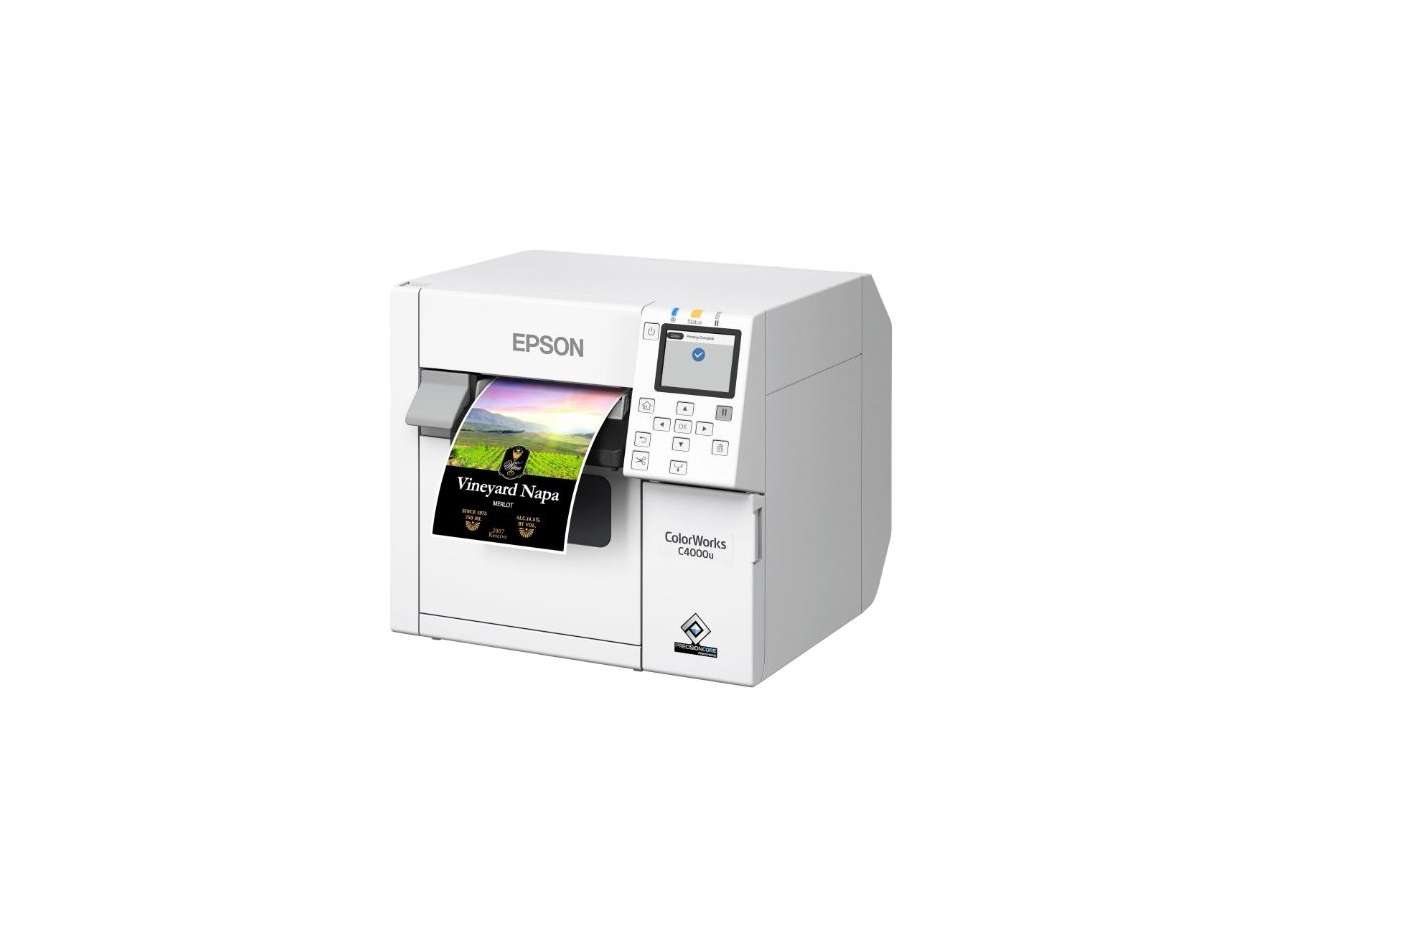 EPSON CW-C4000 Series Color Label Printer User Manual